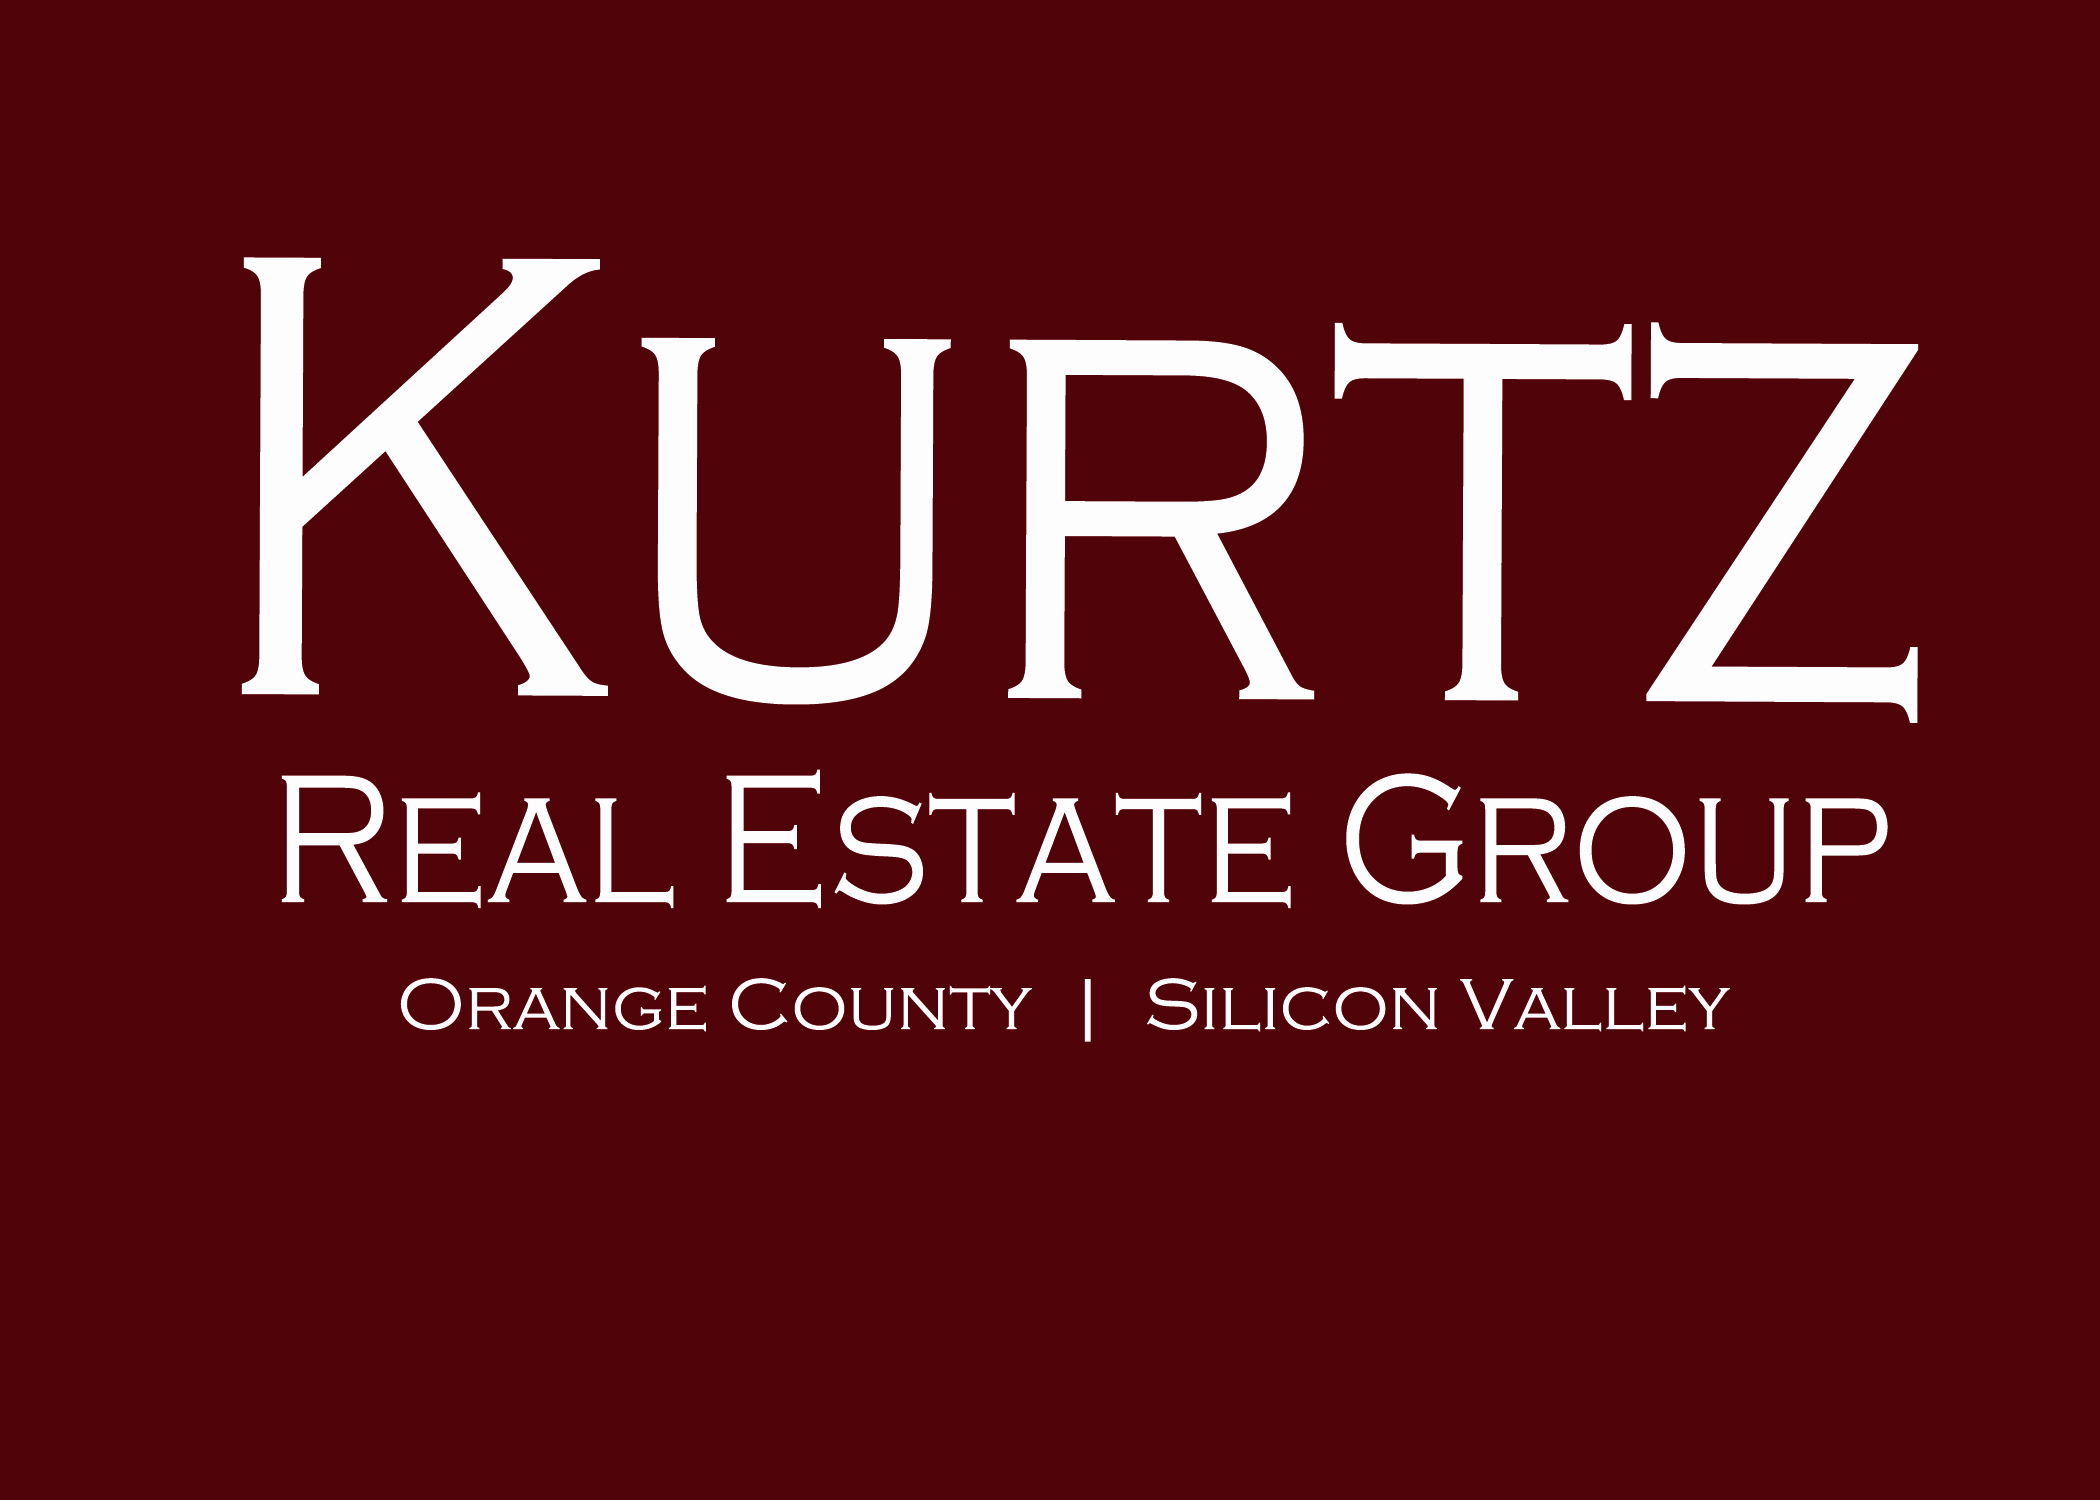 Kurtz Real Estate Group